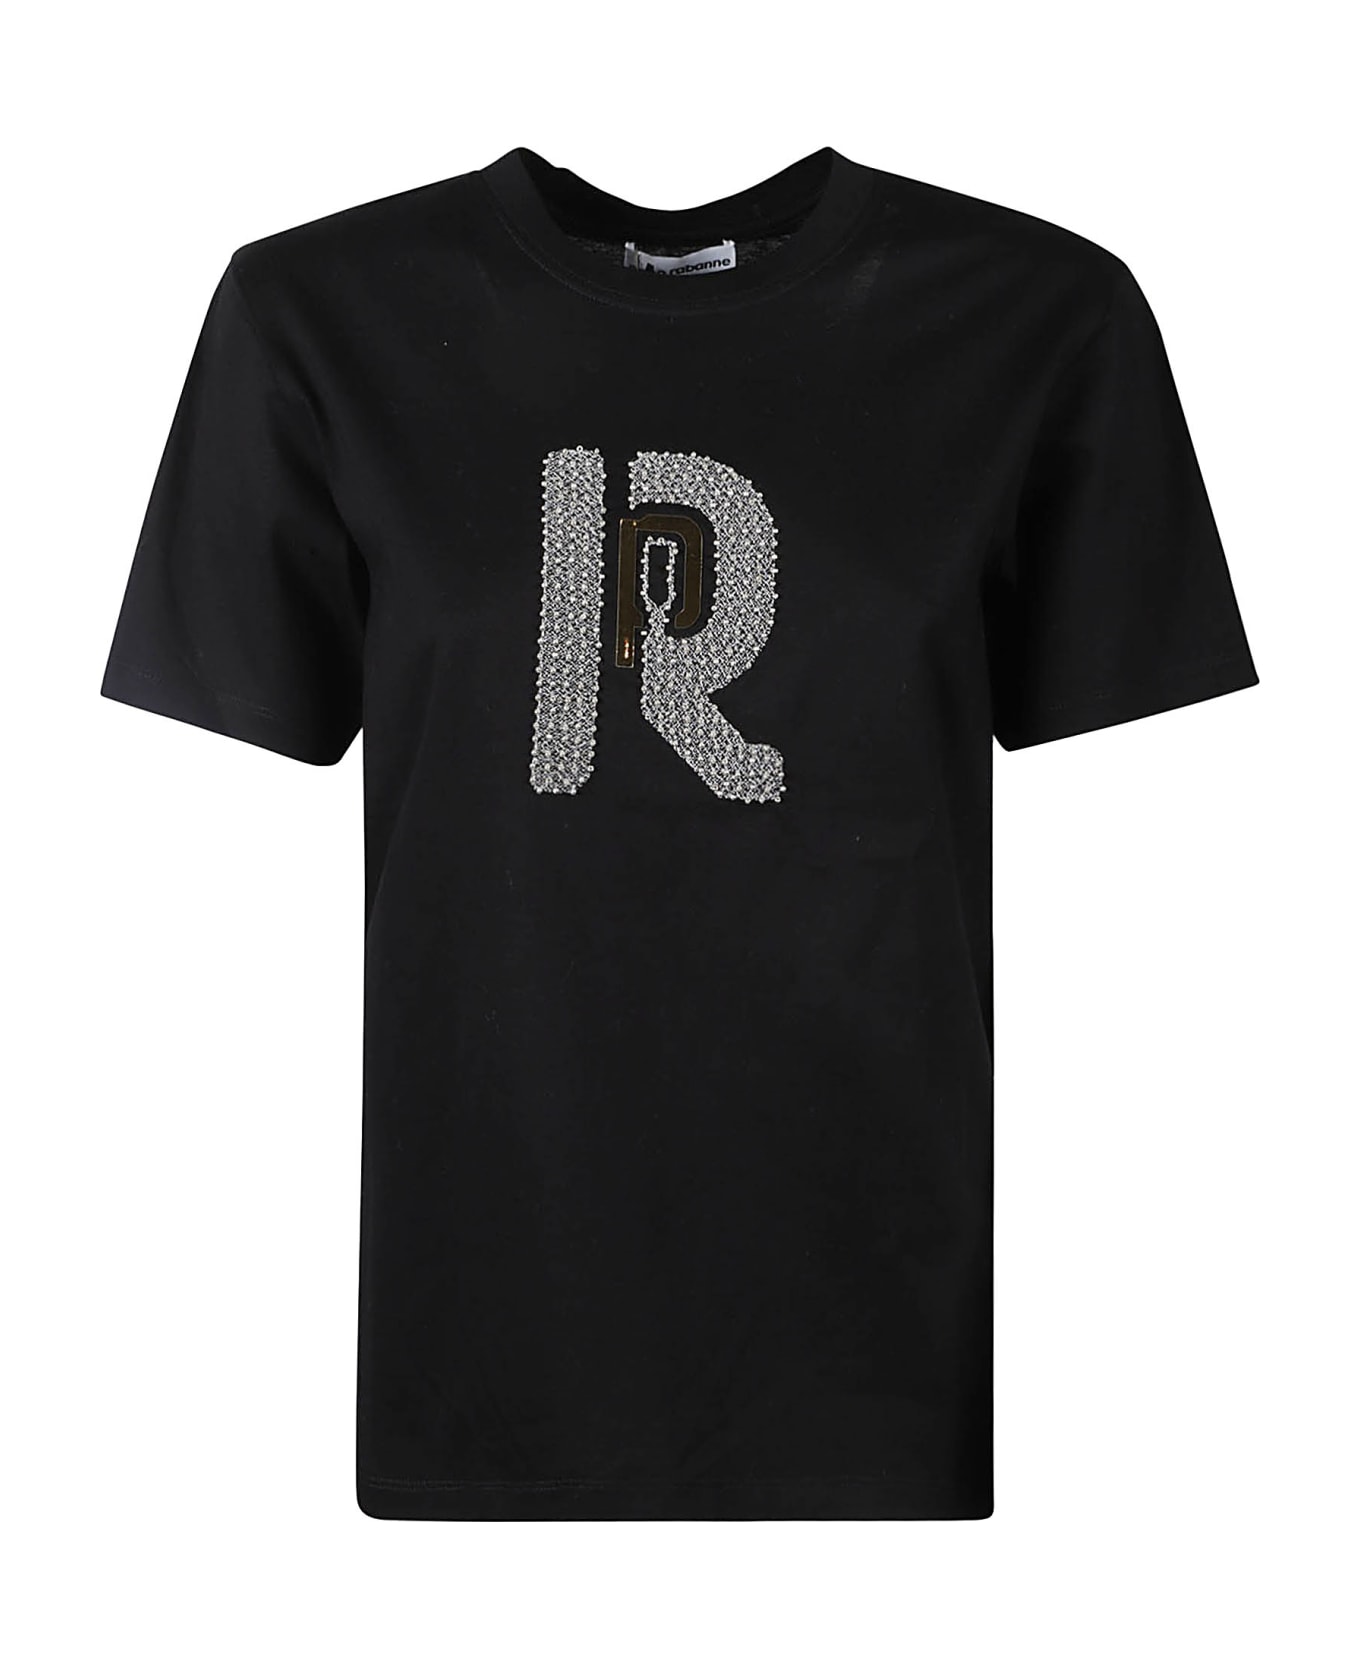 Paco Rabanne Embellished T-shirt - Black